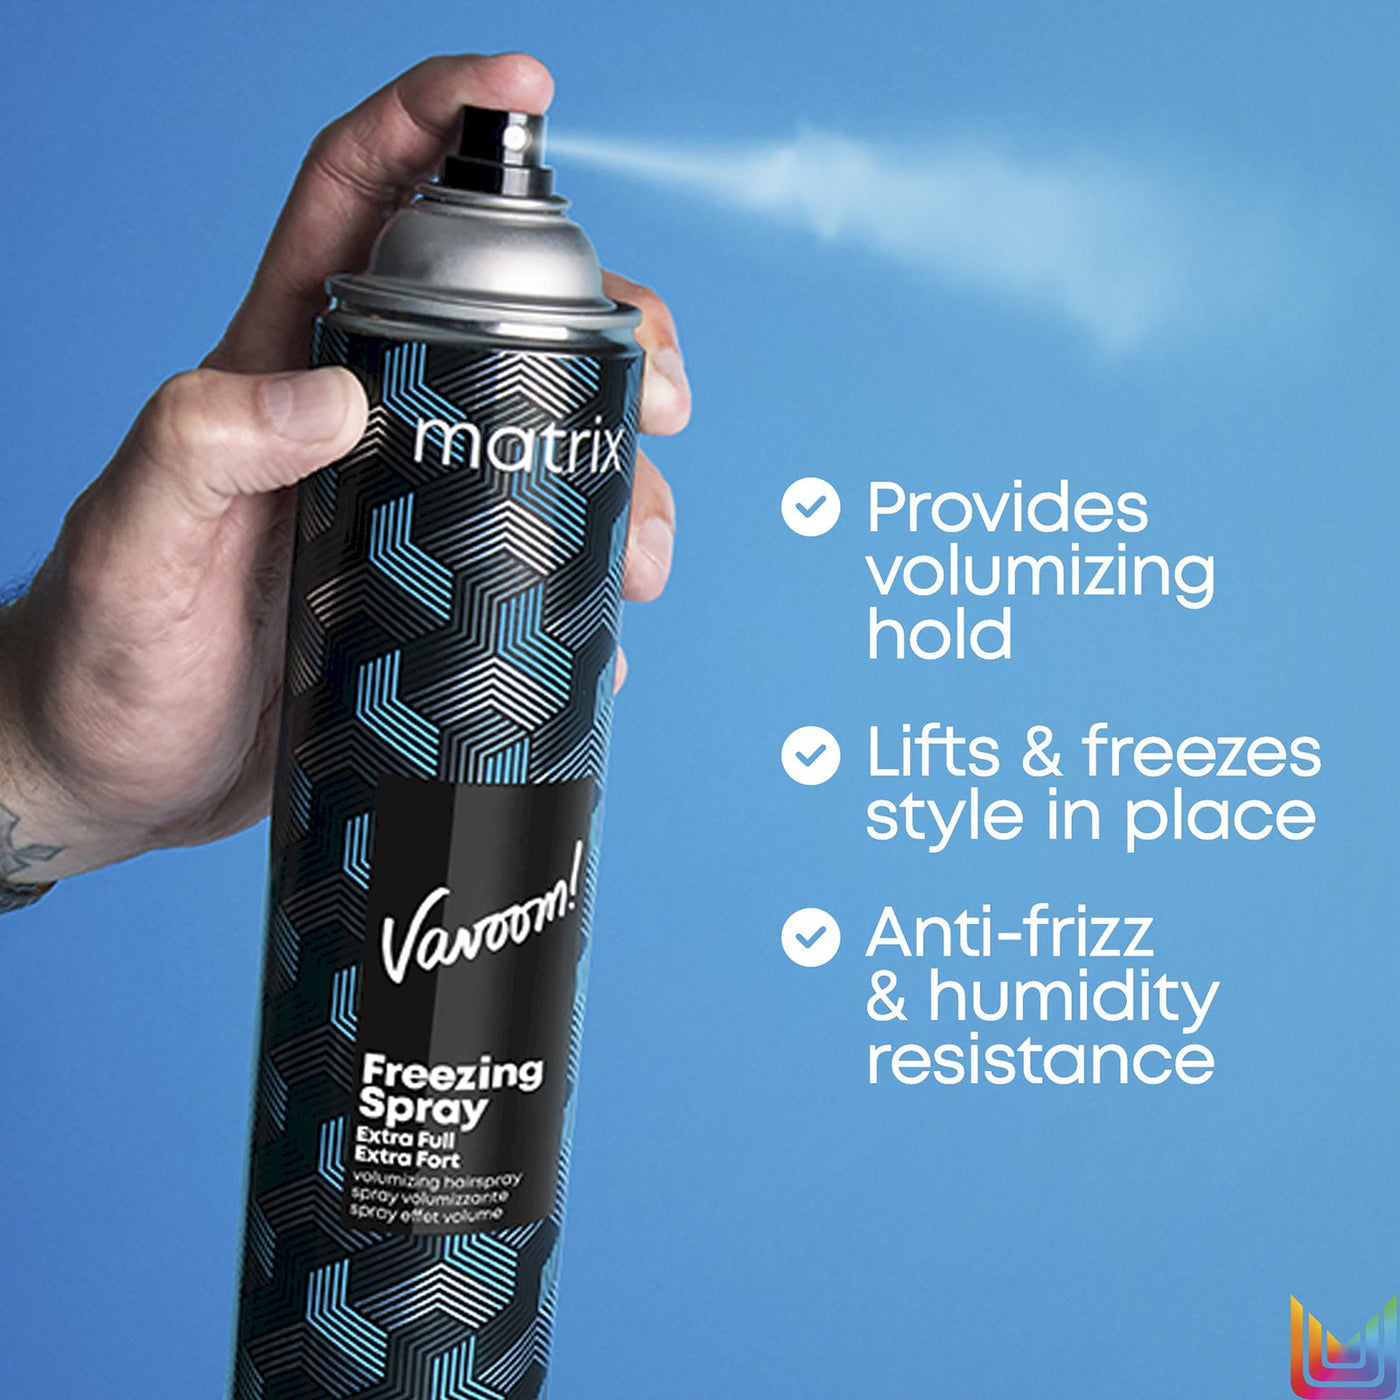 Matrix Vavoom Freezing Spray Extra Full (423g) features